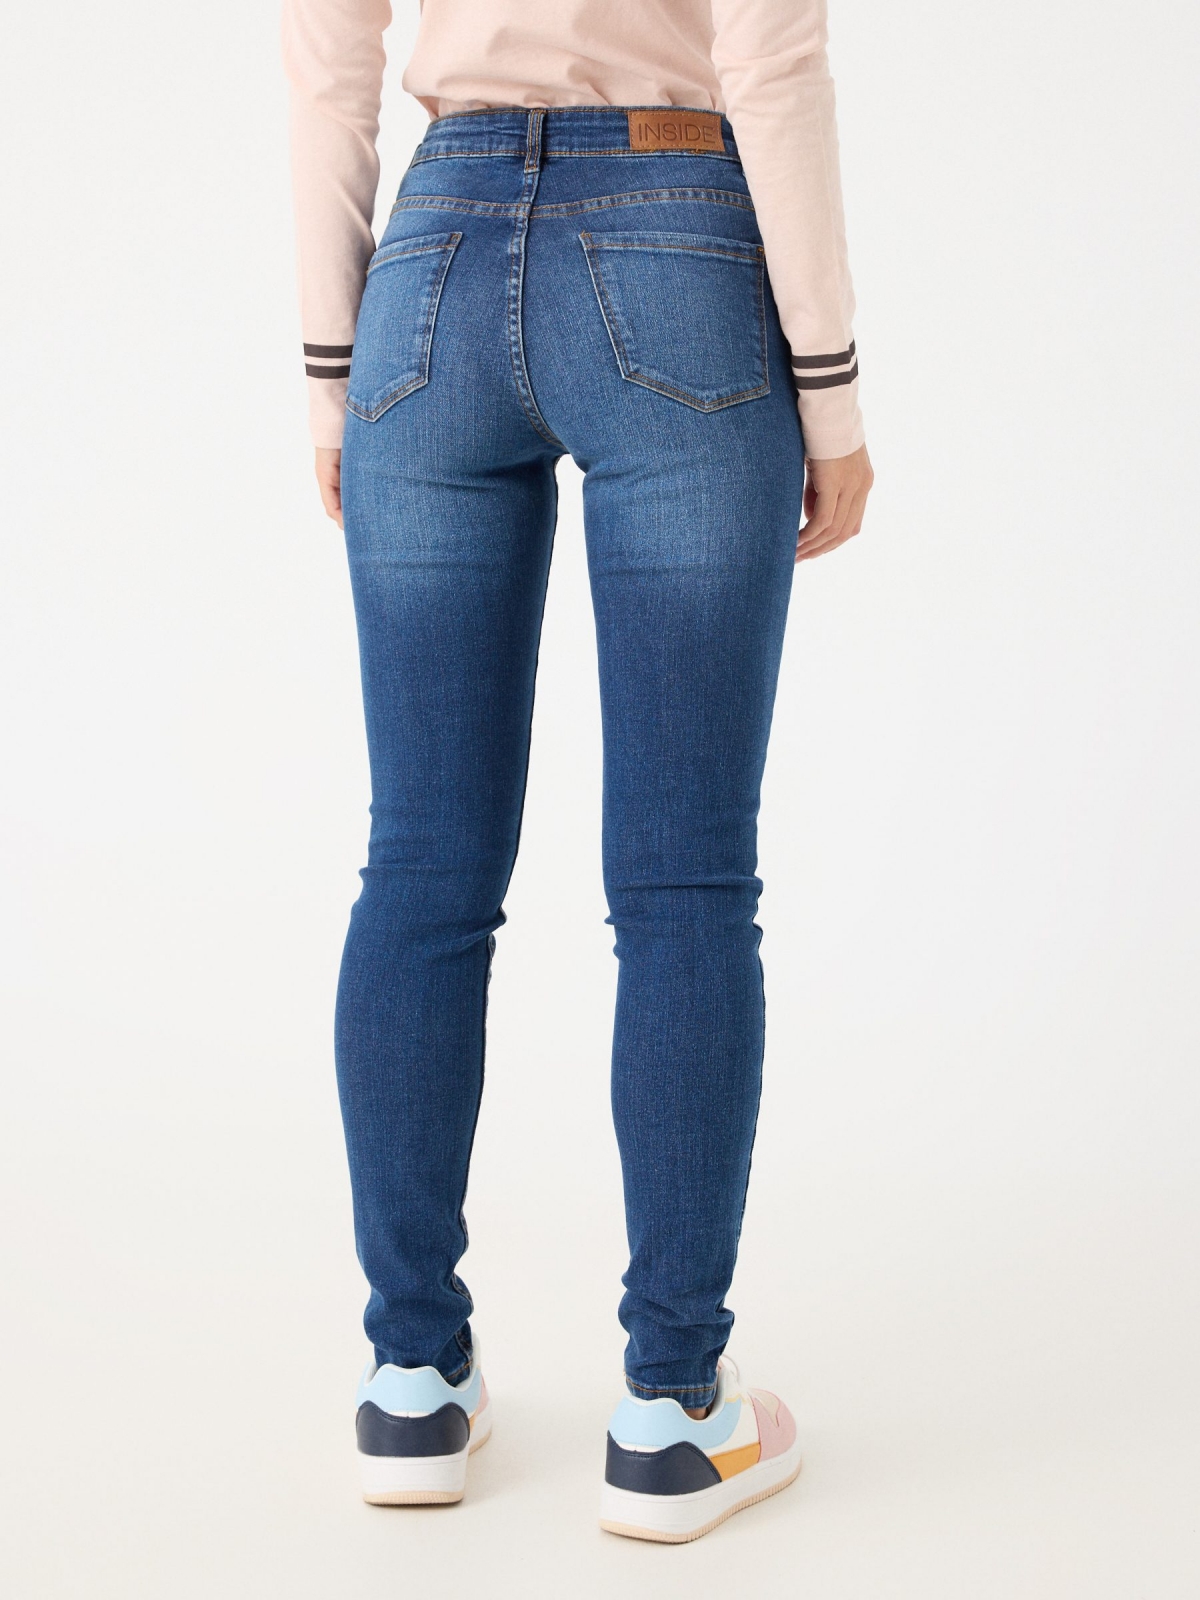 Jeans skinny tiro medio azul índigo vista media trasera